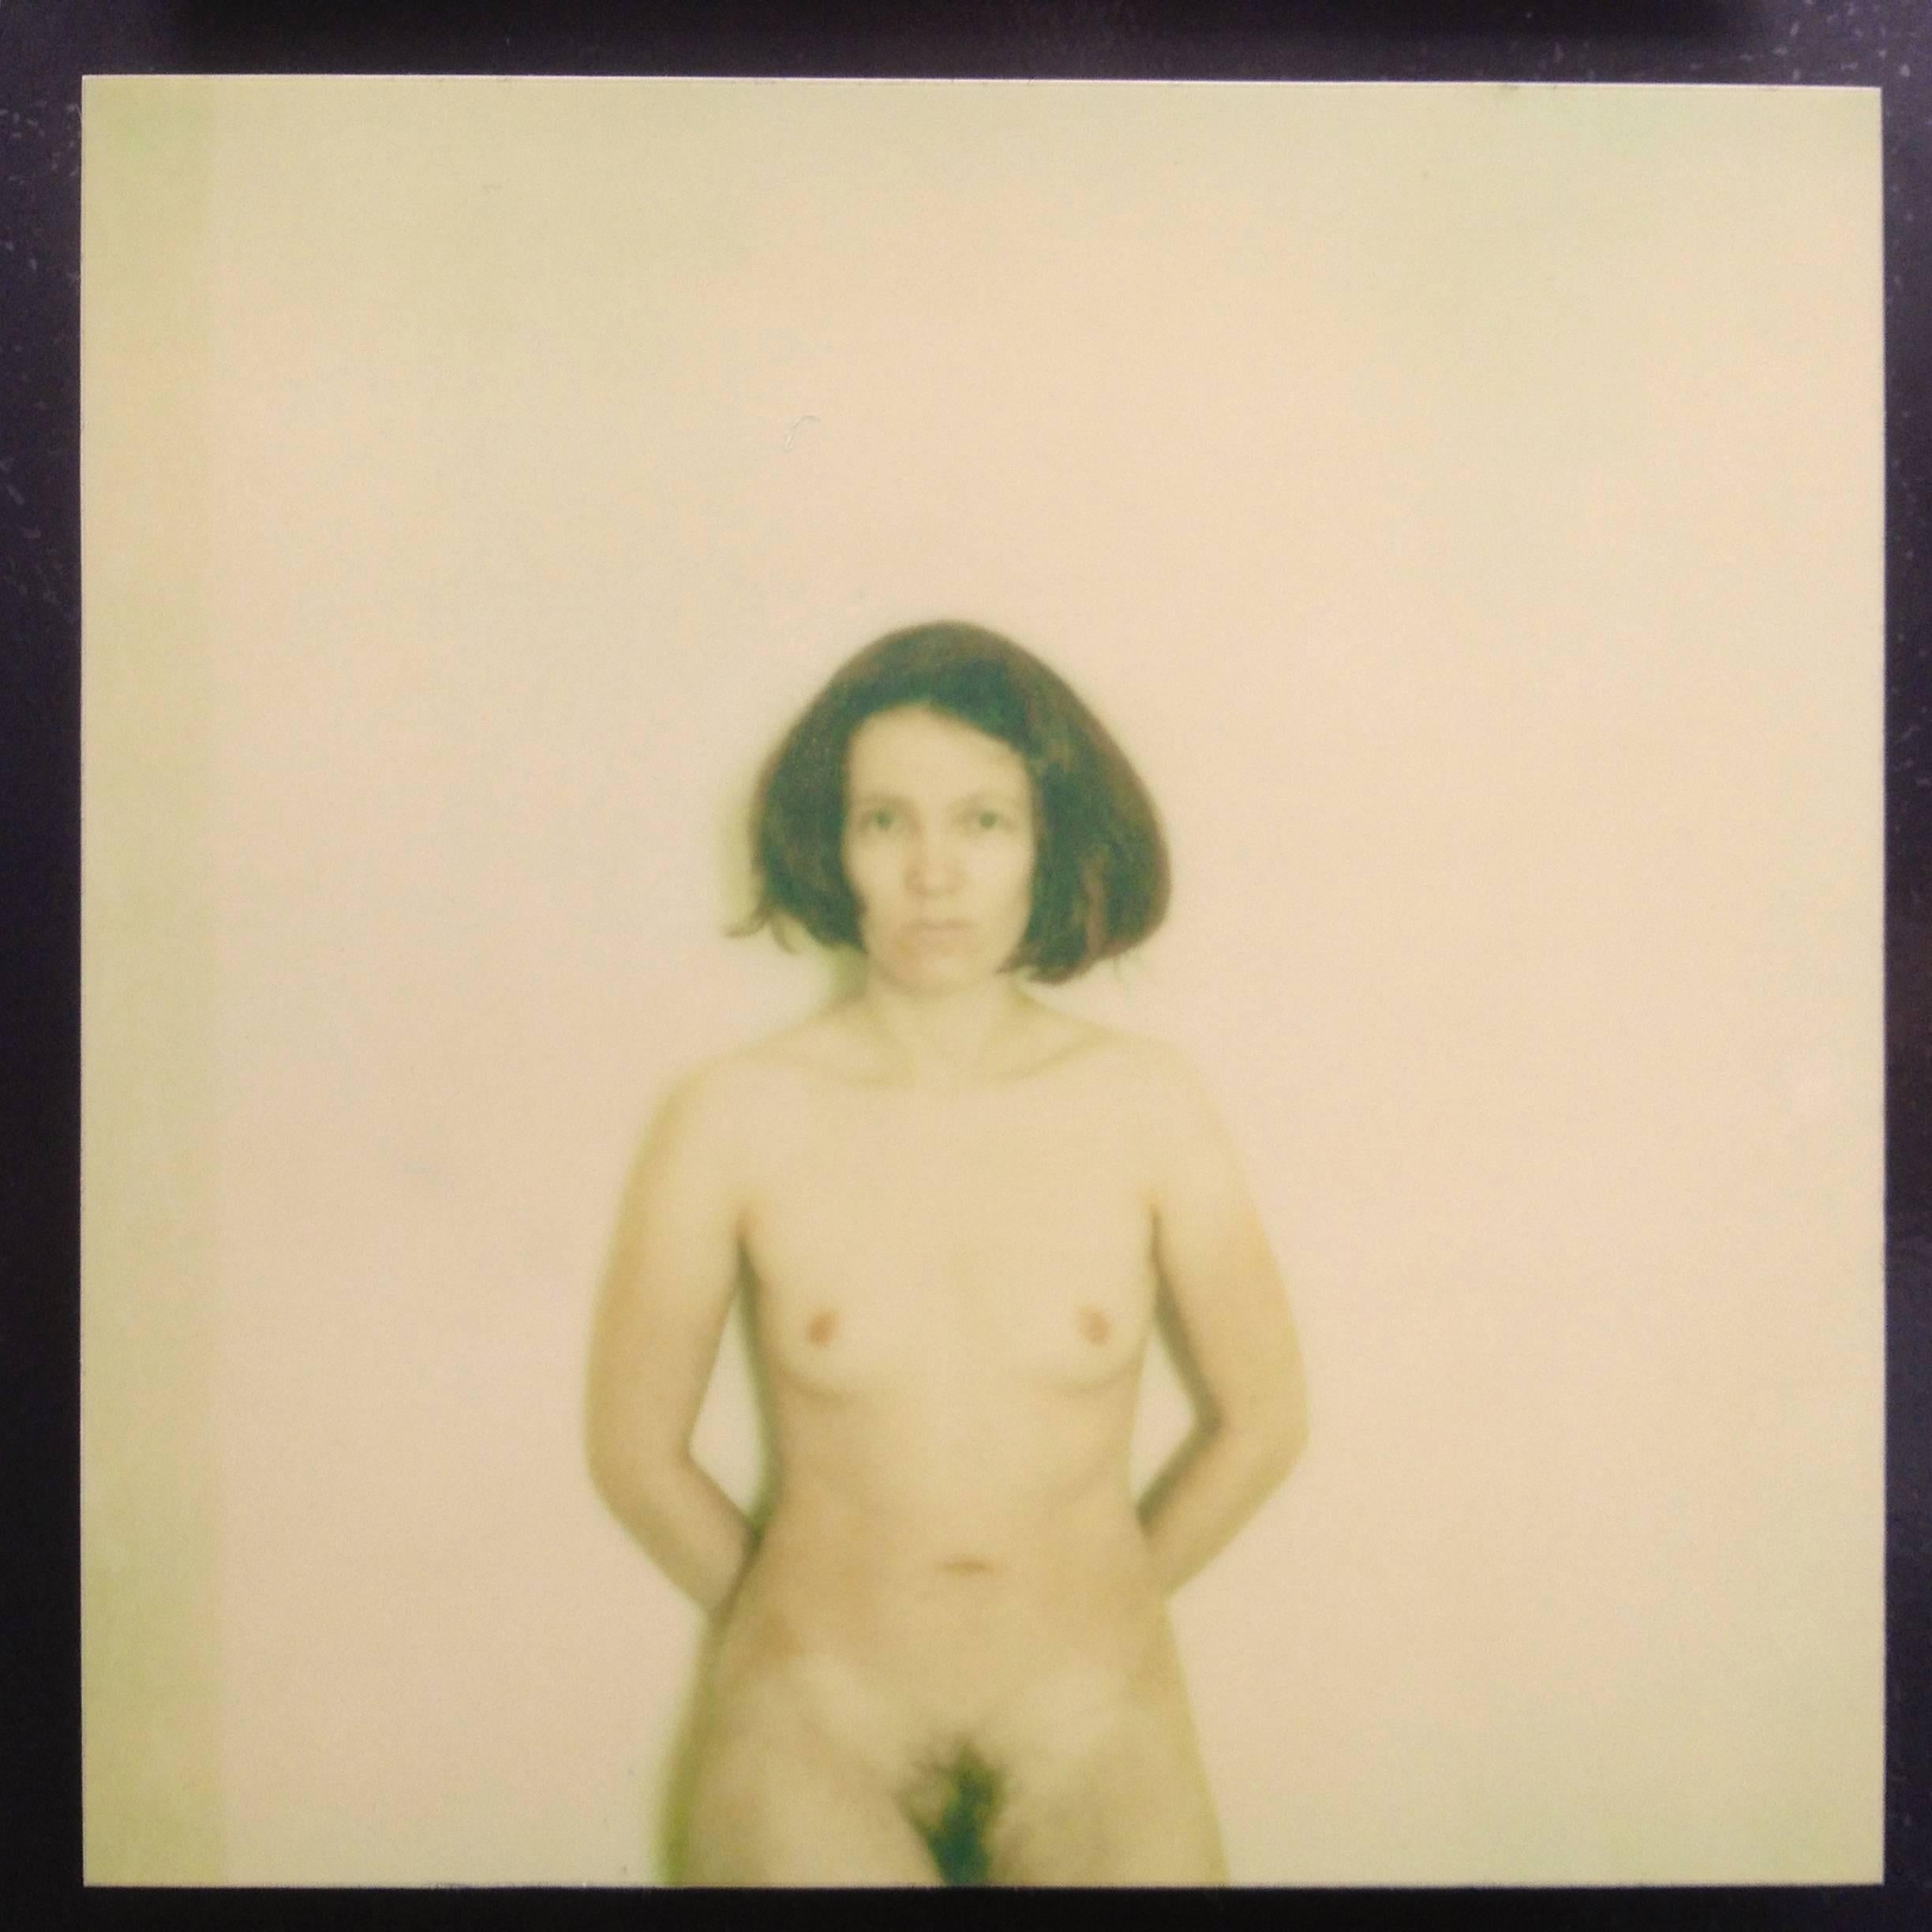 Shelbourne Hotel (Strange Love) - Nude, New York, Contemporary, Polaroid - Photograph by Stefanie Schneider